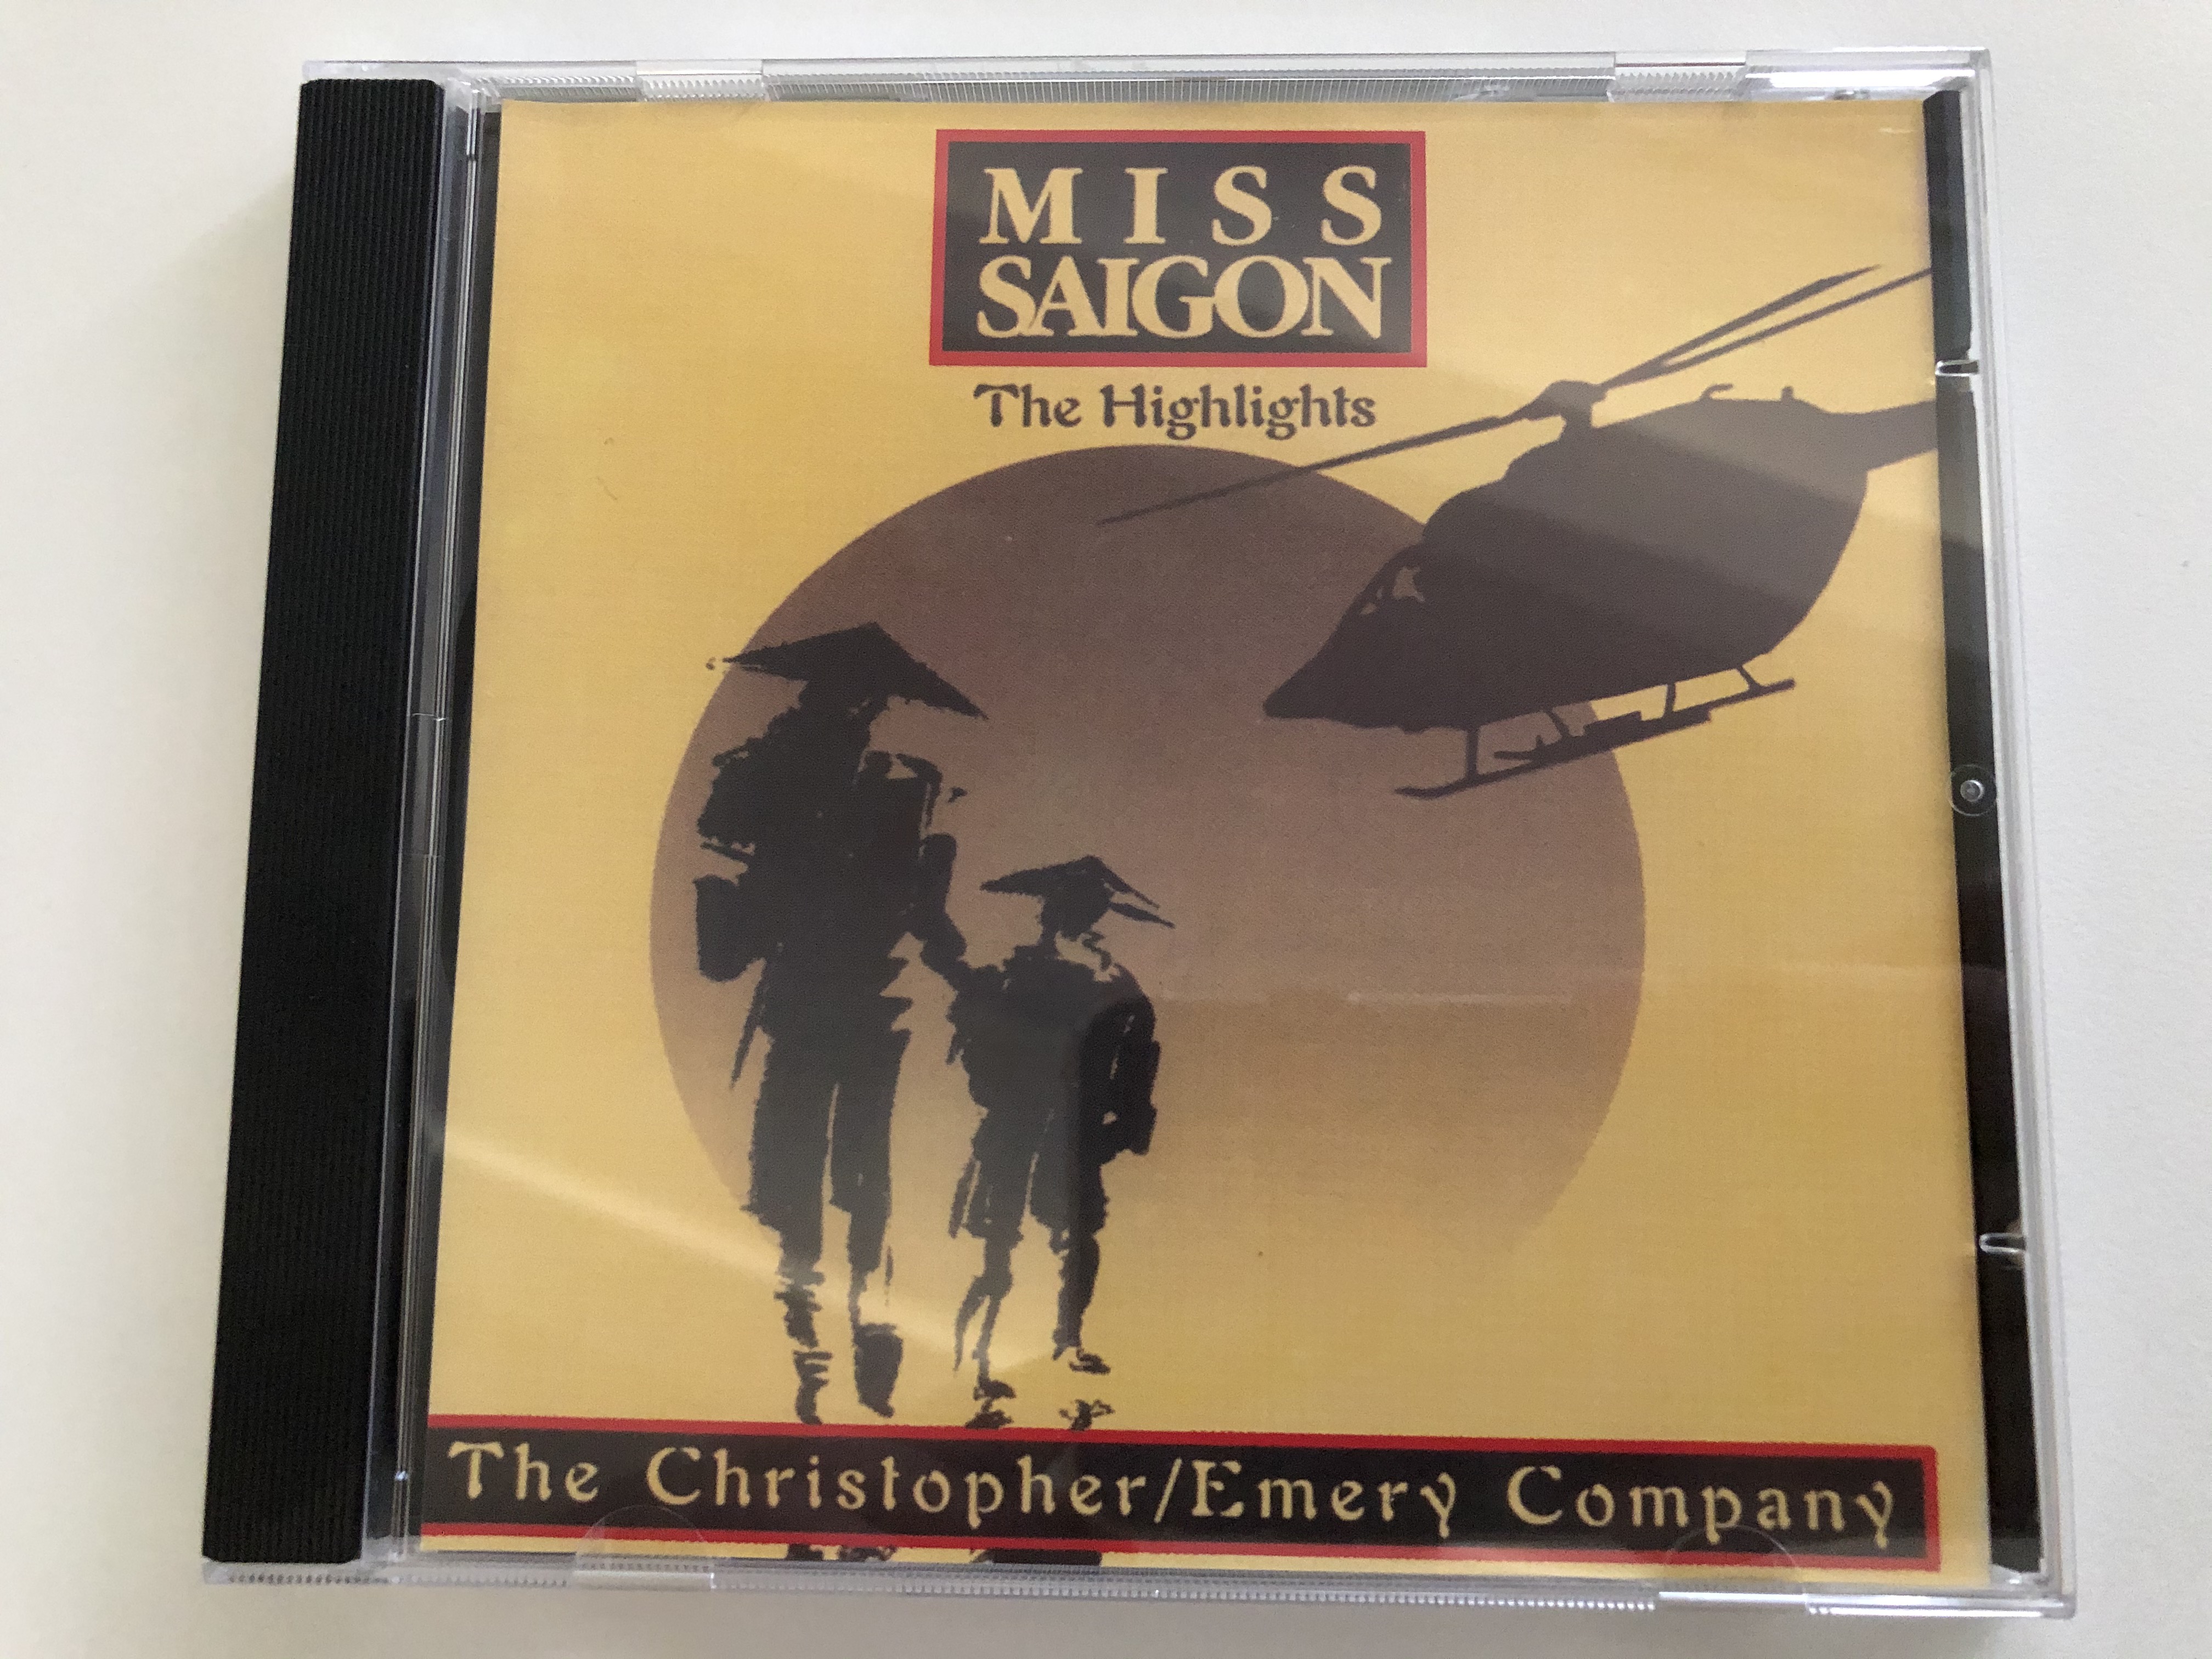 miss-saigon-the-highlights-the-christopheremery-company-euro-trend-audio-cd-stereo-cd-157-1-.jpg